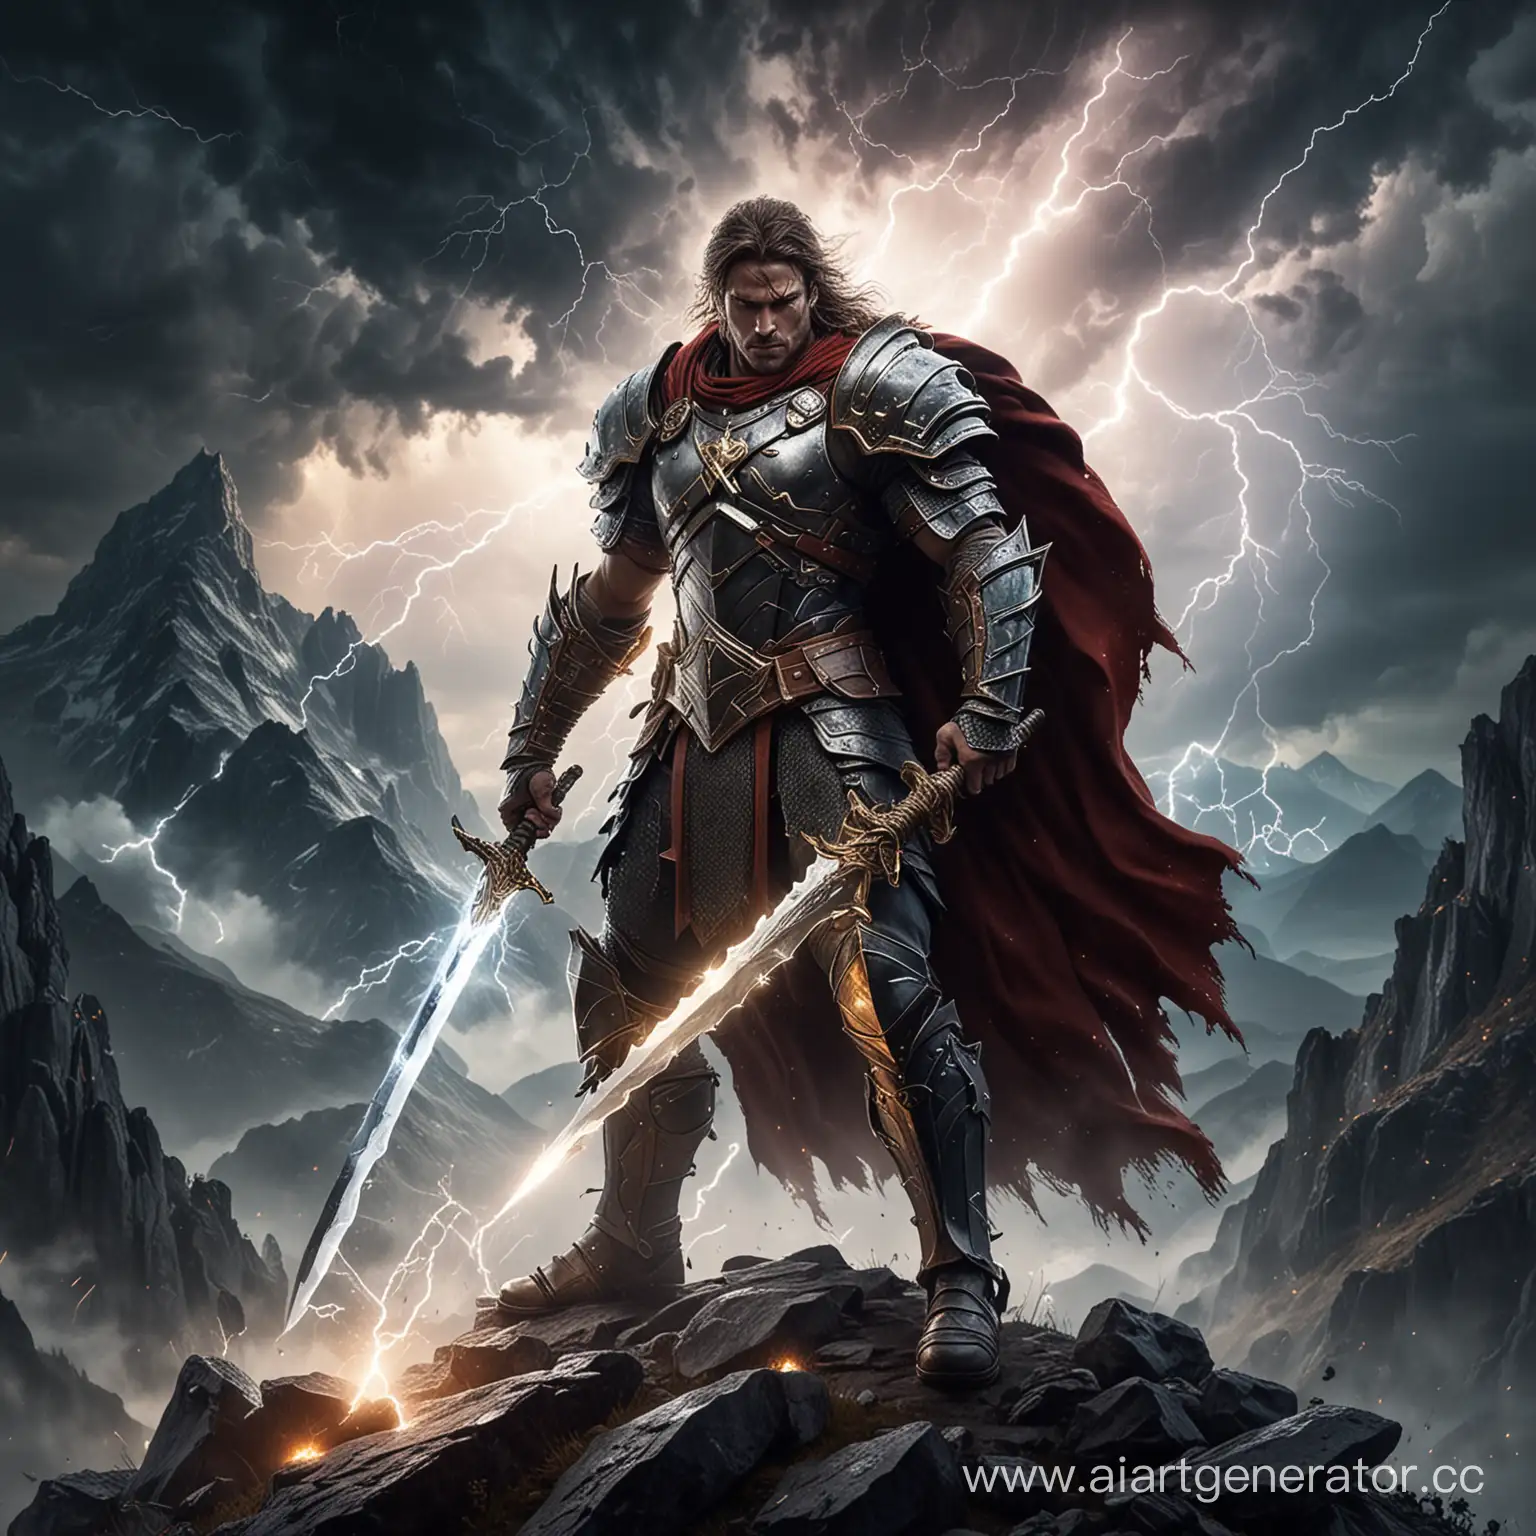 LightningClad-Warrior-with-Sword-atop-Mountain-Peak